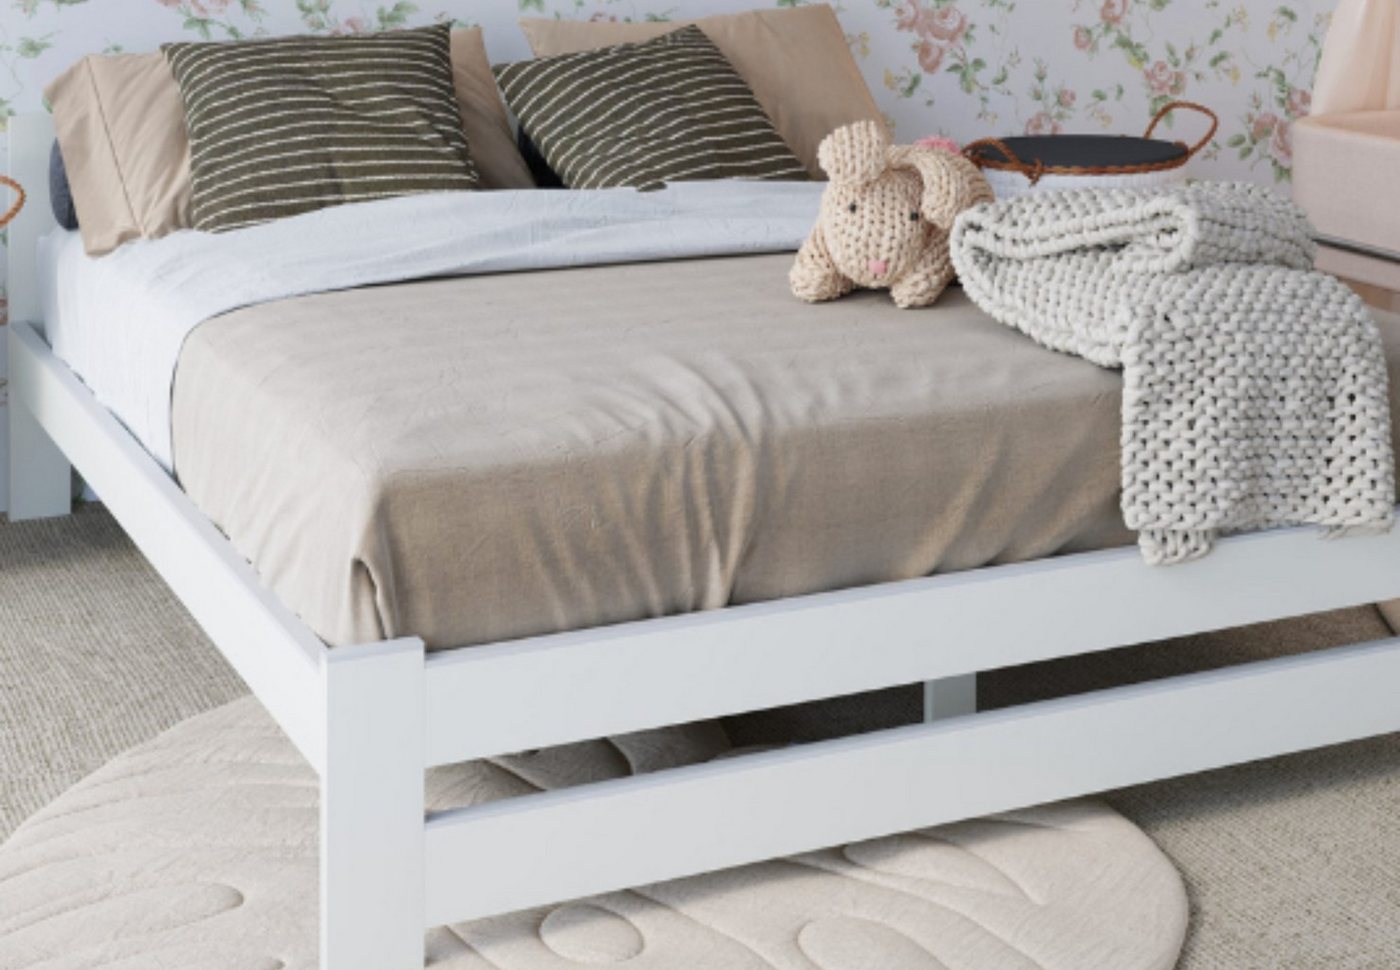 Home Collective Holzbett mit Lattenrost Modern Bett Kiefer Bettgestell Mass günstig online kaufen